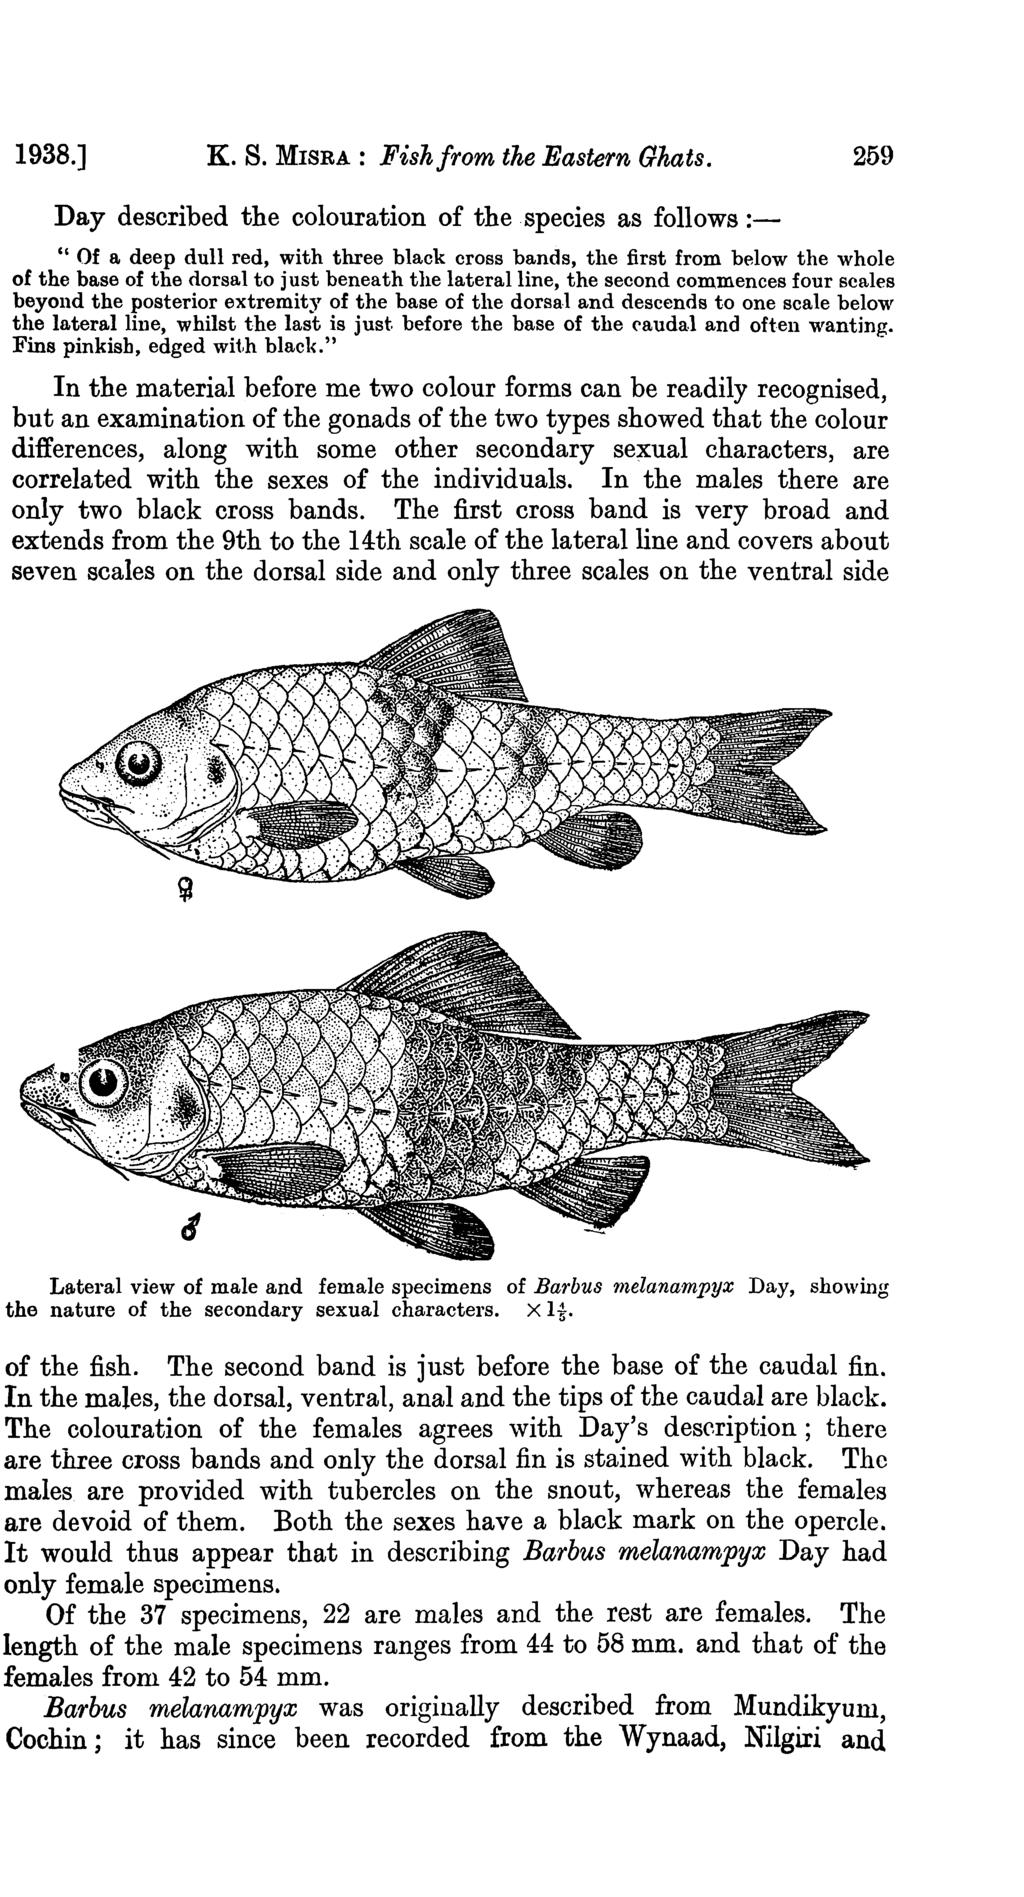 1938.] K. S. MISRA: Fishfrom the Eastern Ghats.